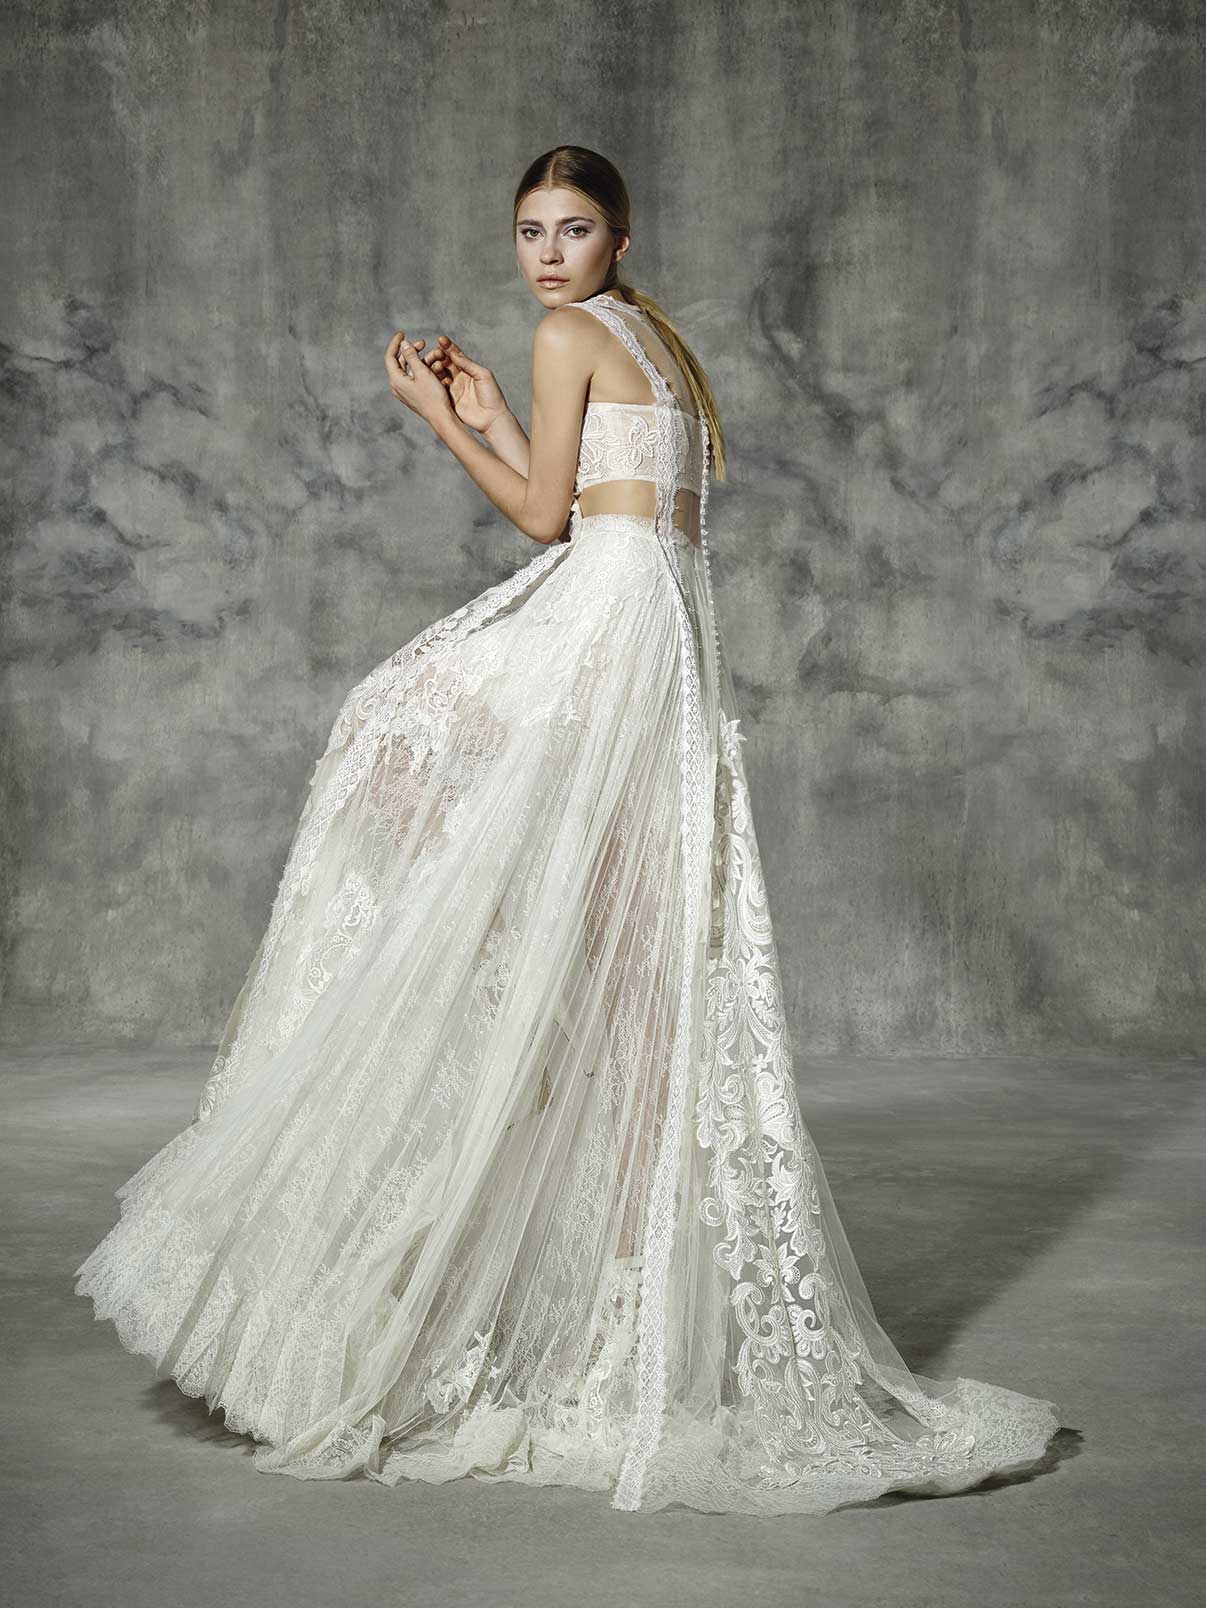 ATOCHA_3_yolancris_romantic_couture_dress_wedding_barcelona_bridal_gown_novia_vestido